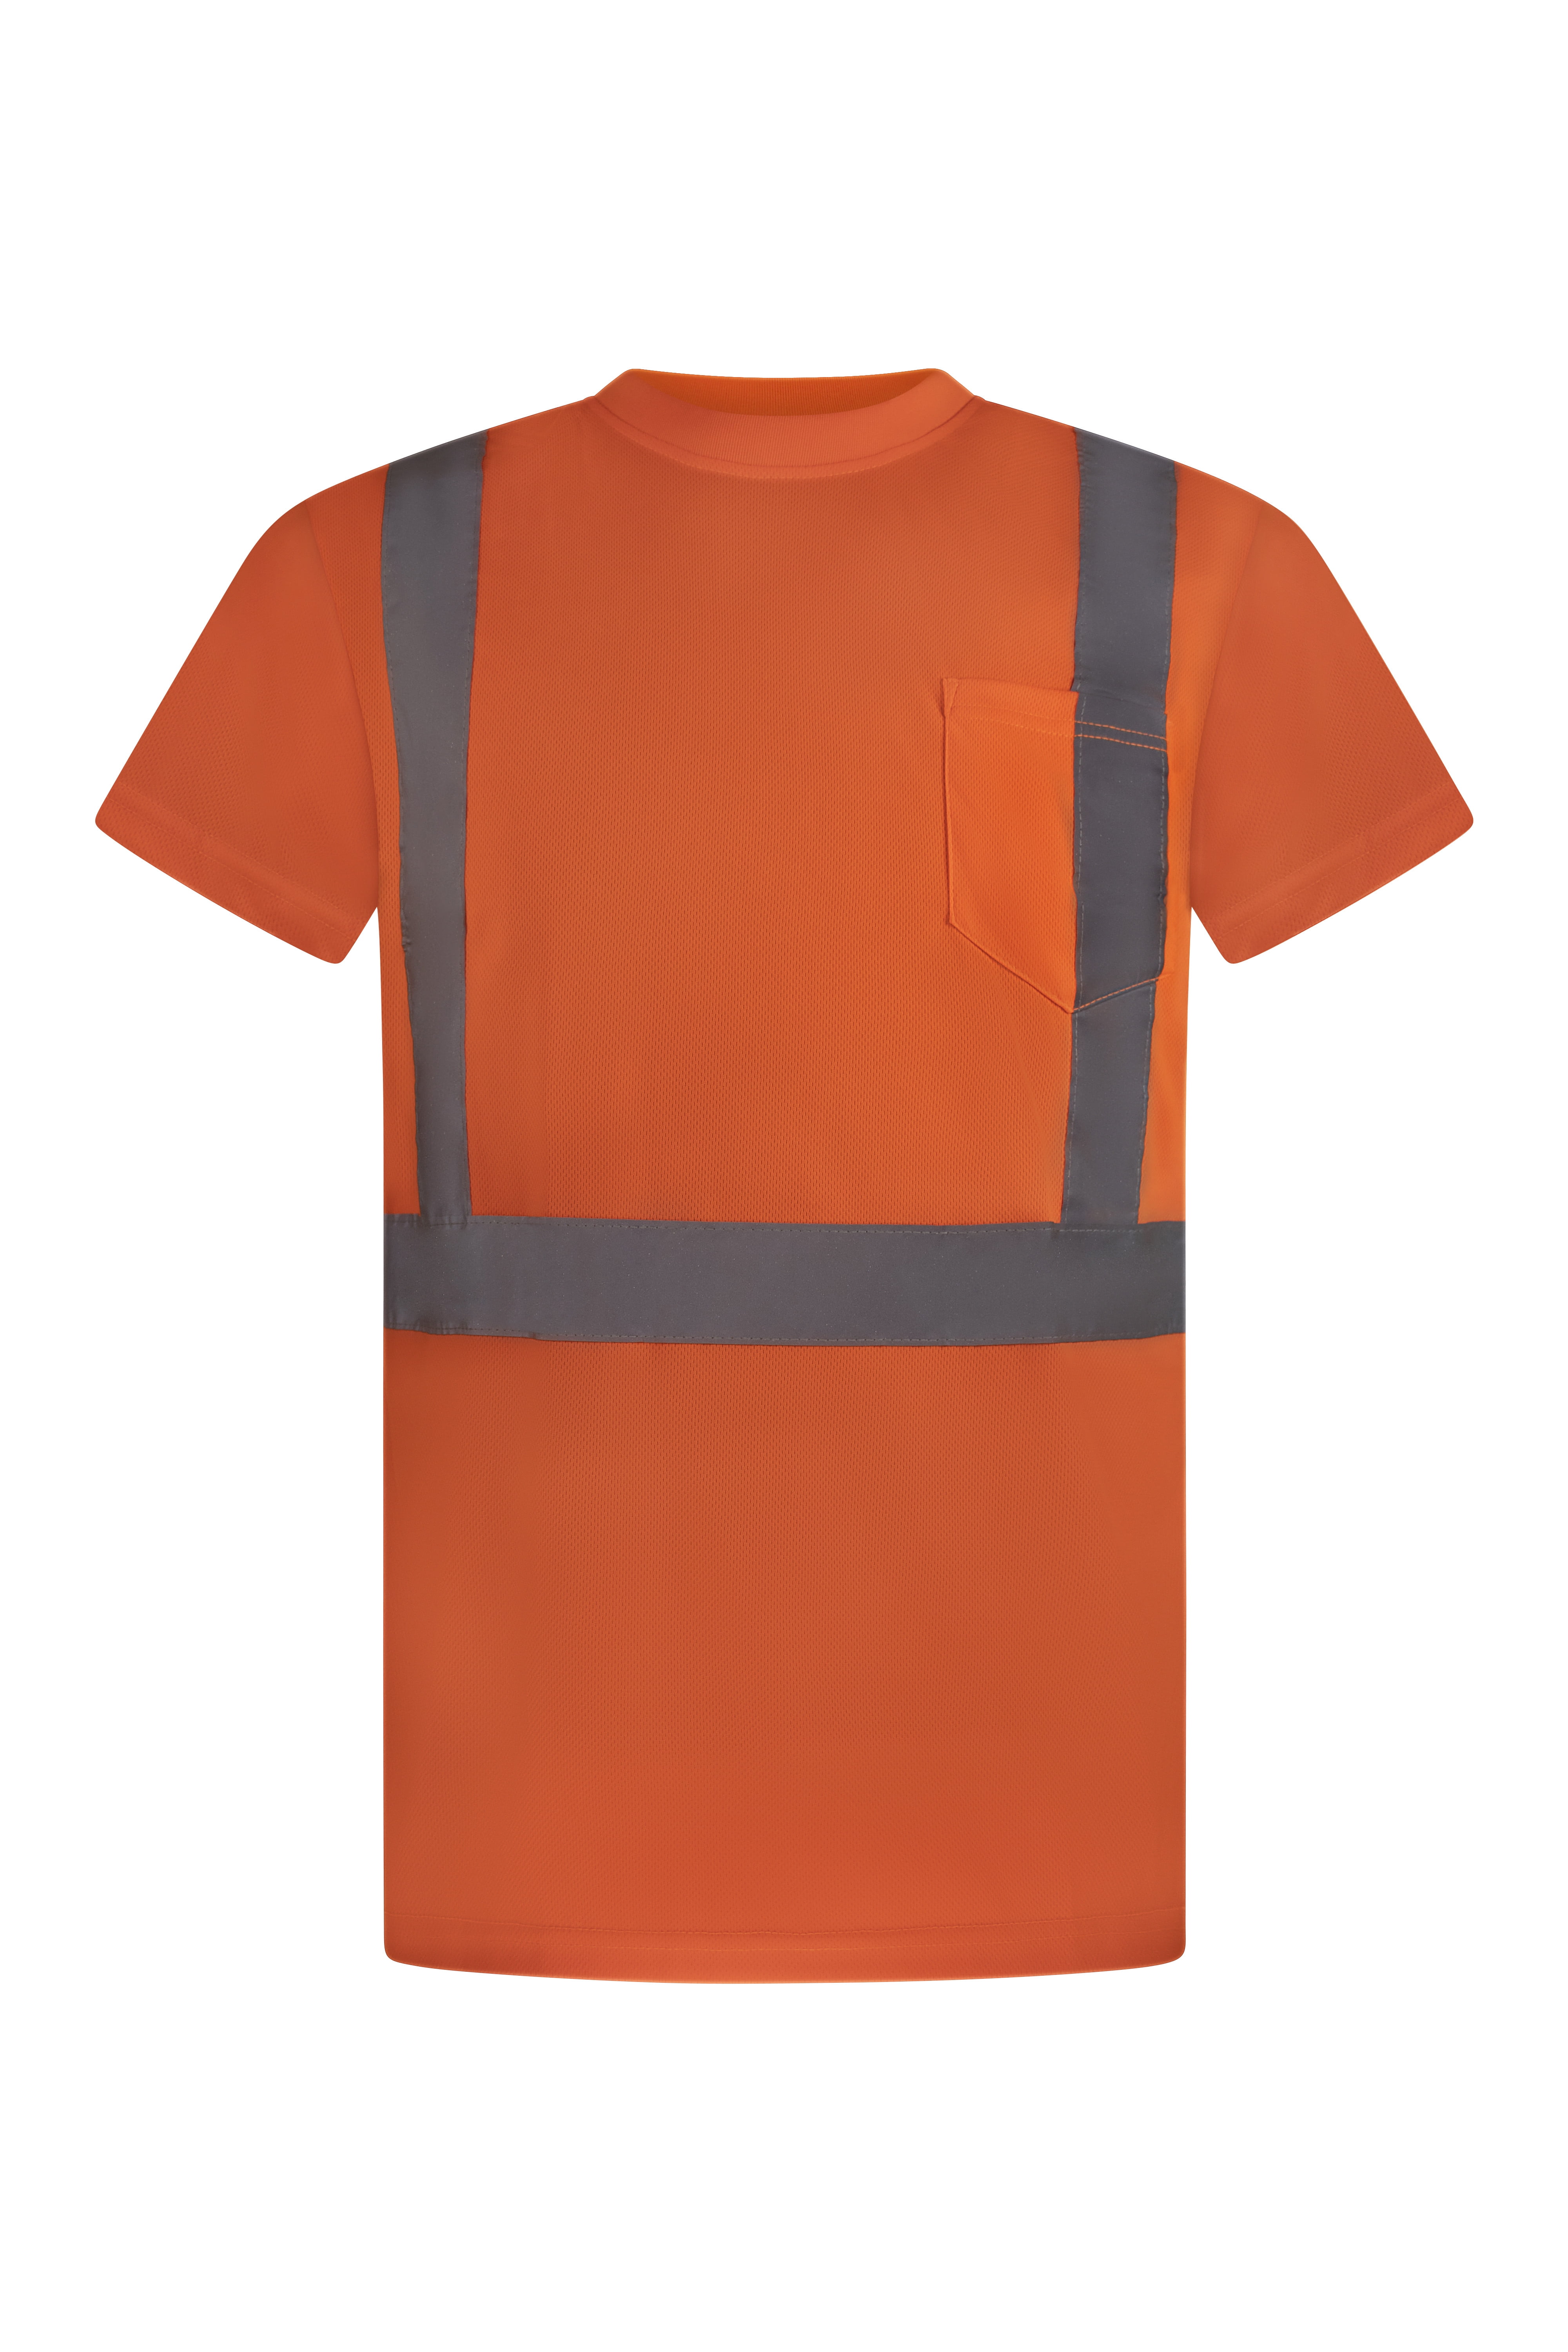 SFVest High Visibility Reflective Safety Work Shirt Reflective Vest P0H2 